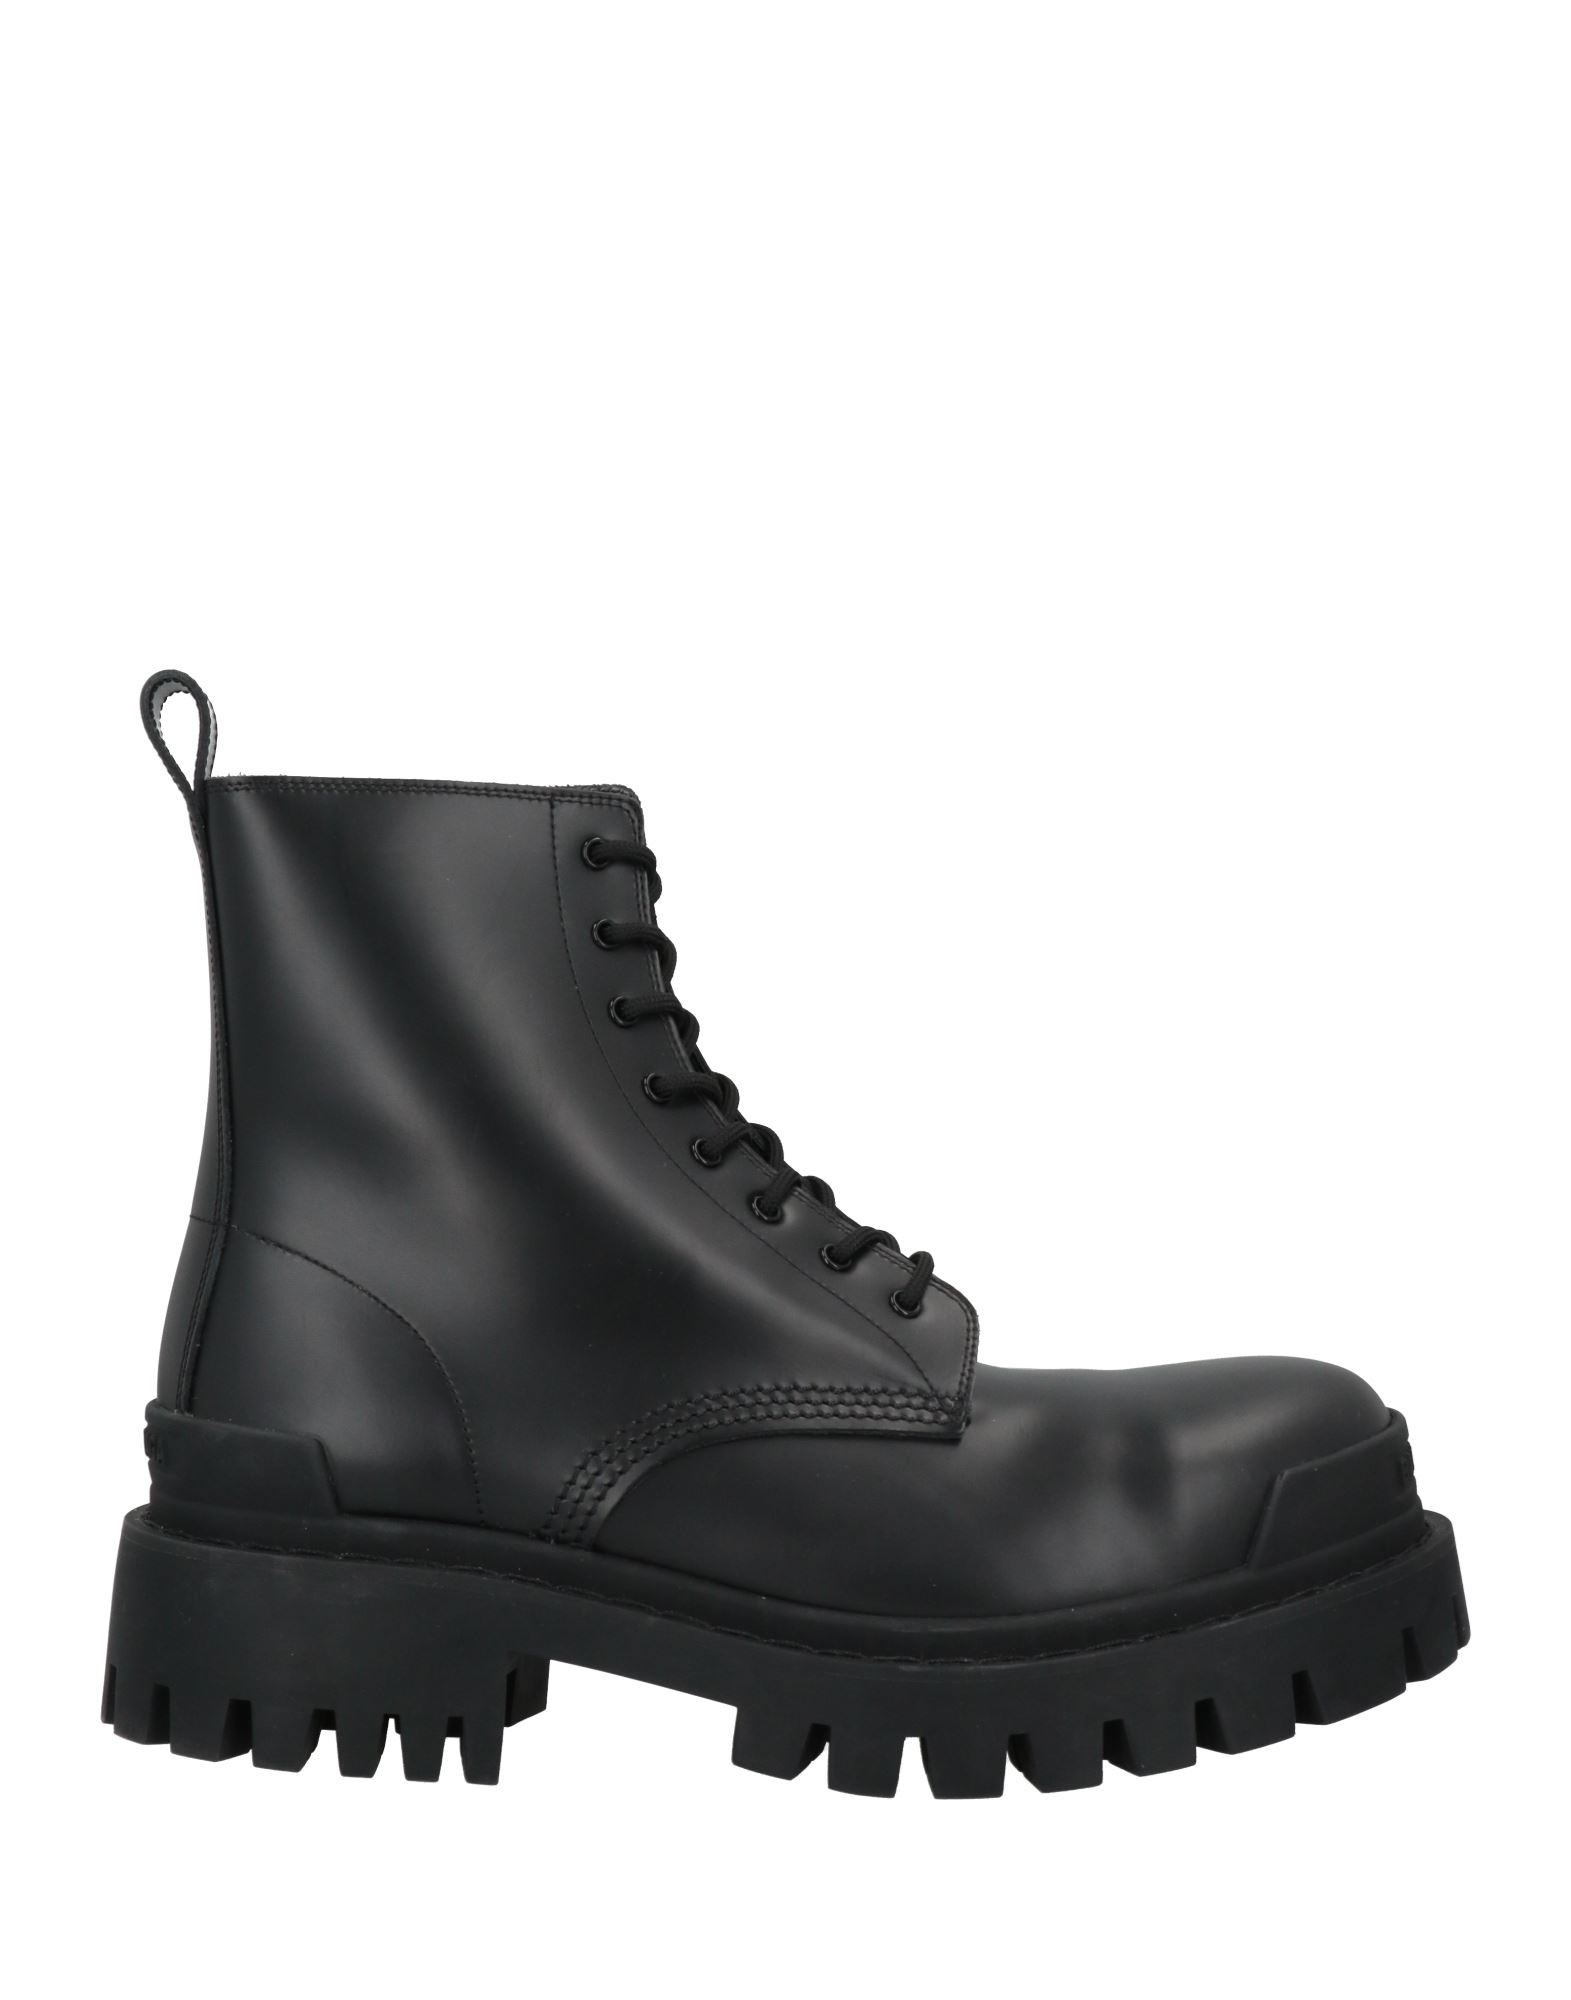 BALENCIAGA Ankle boots - Item 11889265